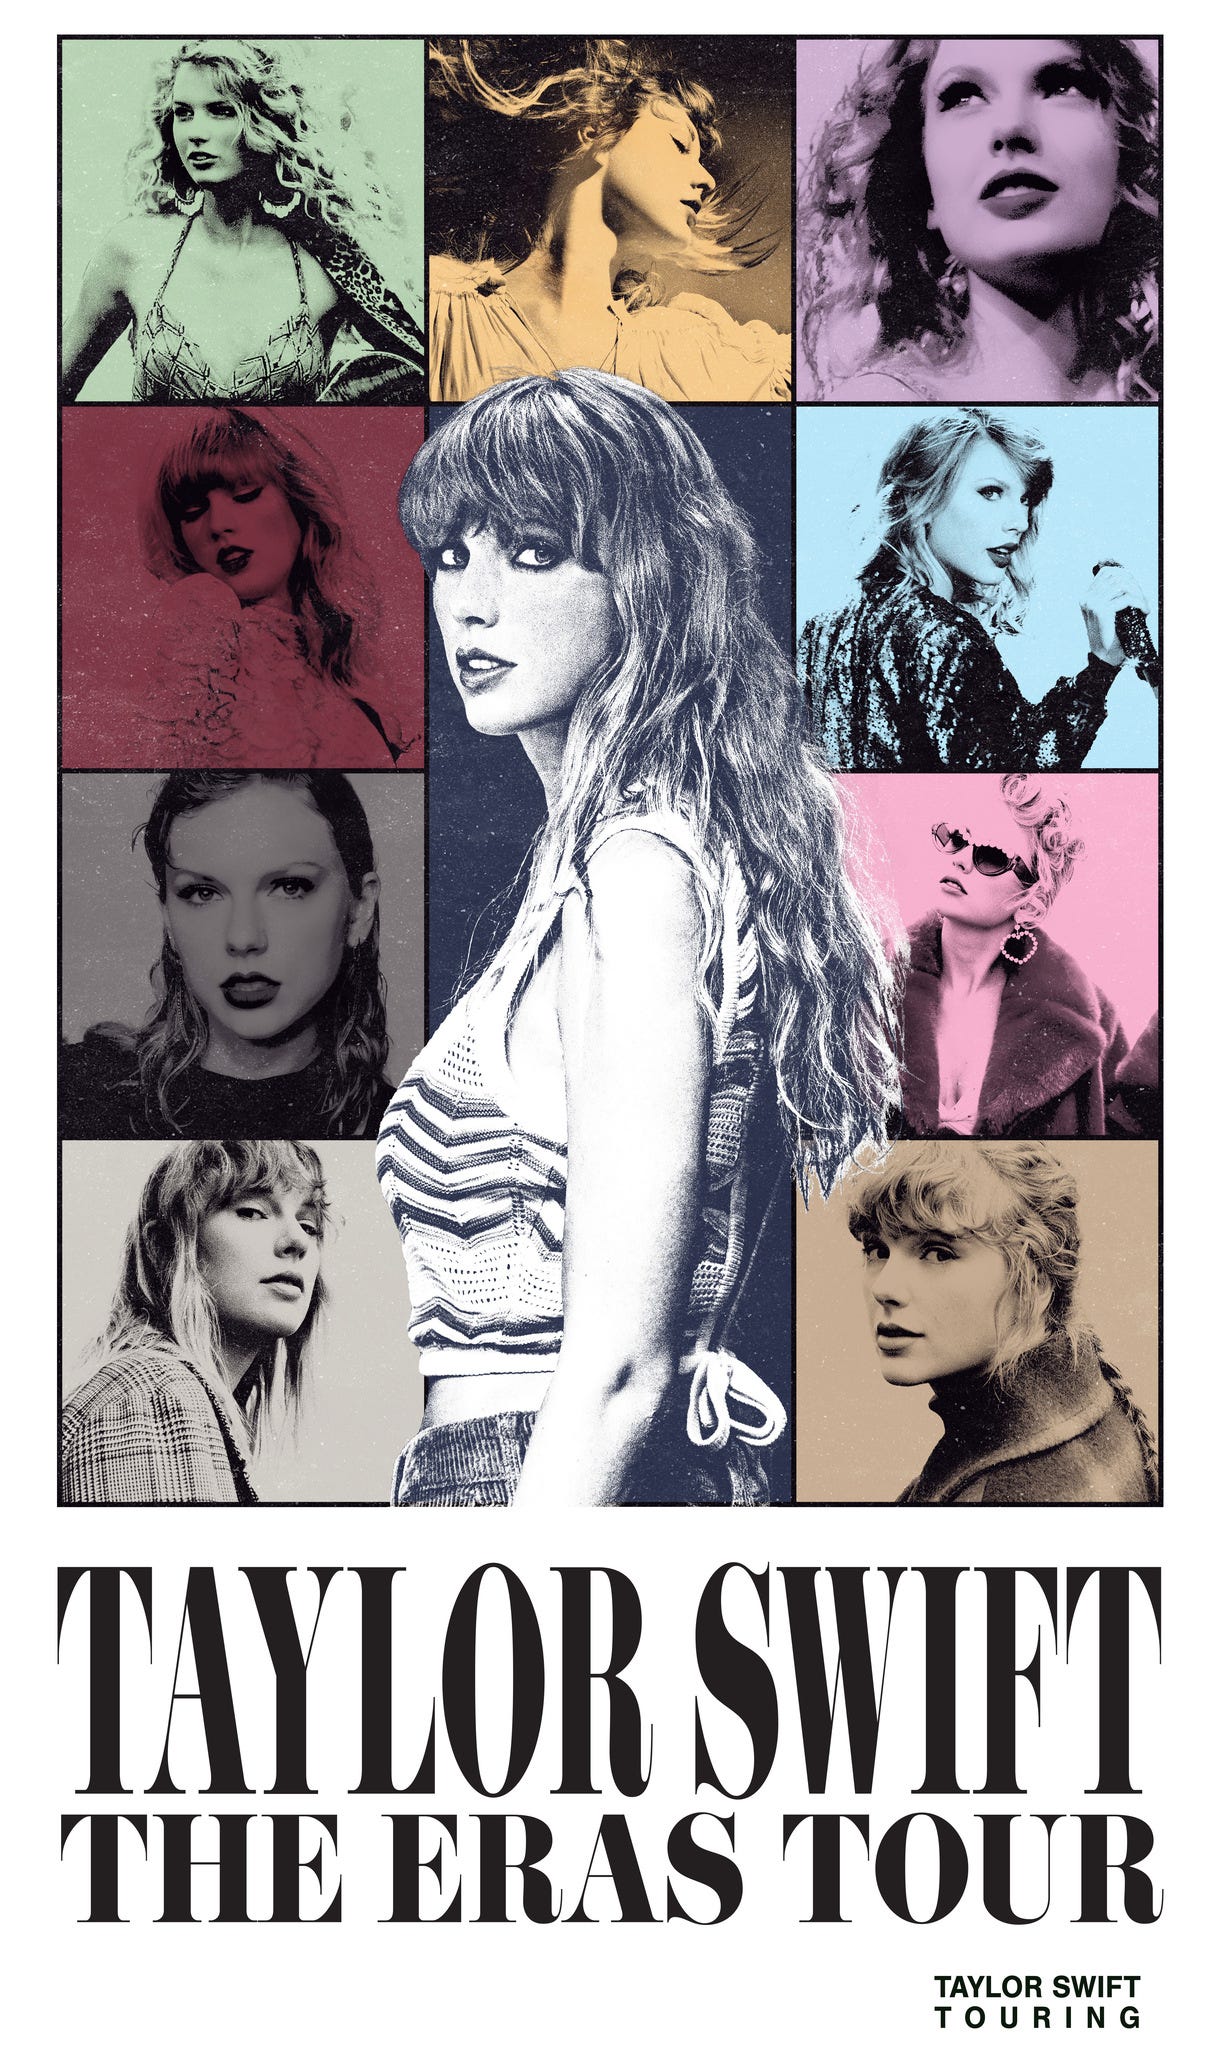 Events International - Taylor Swift